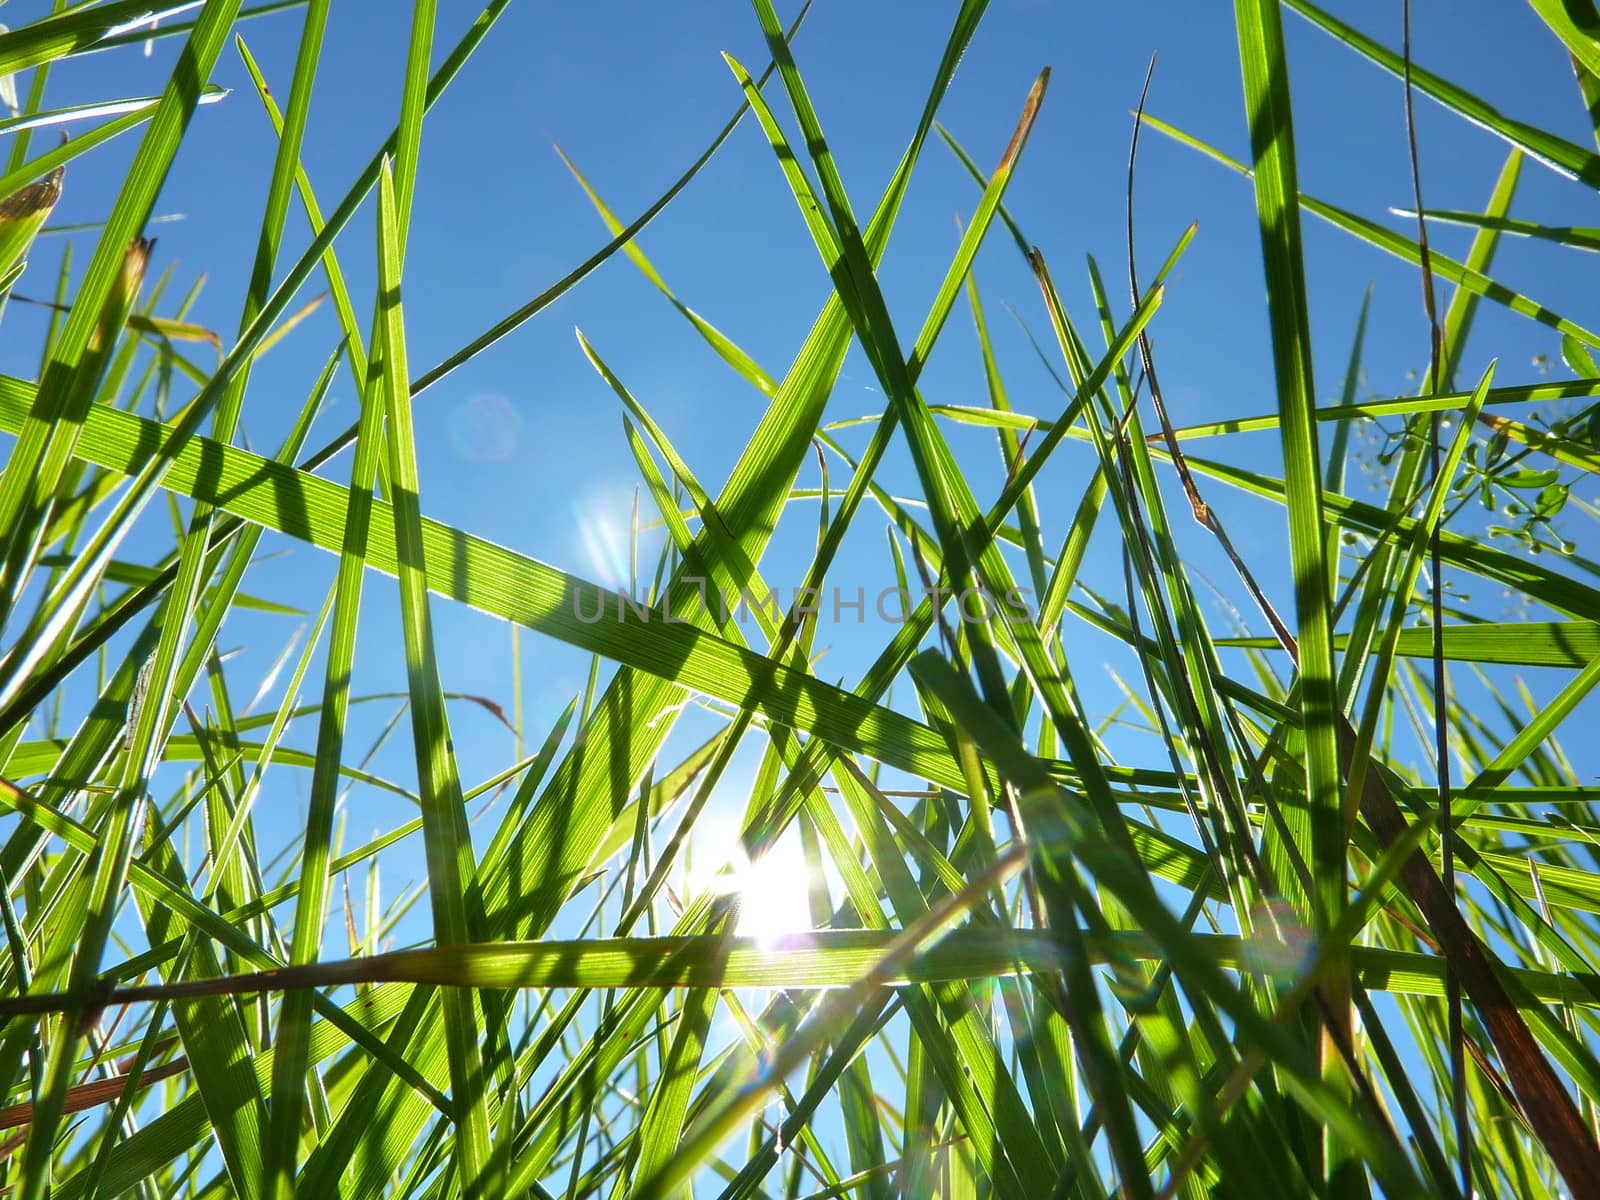 Grass blades against a blue sky and sunshine.